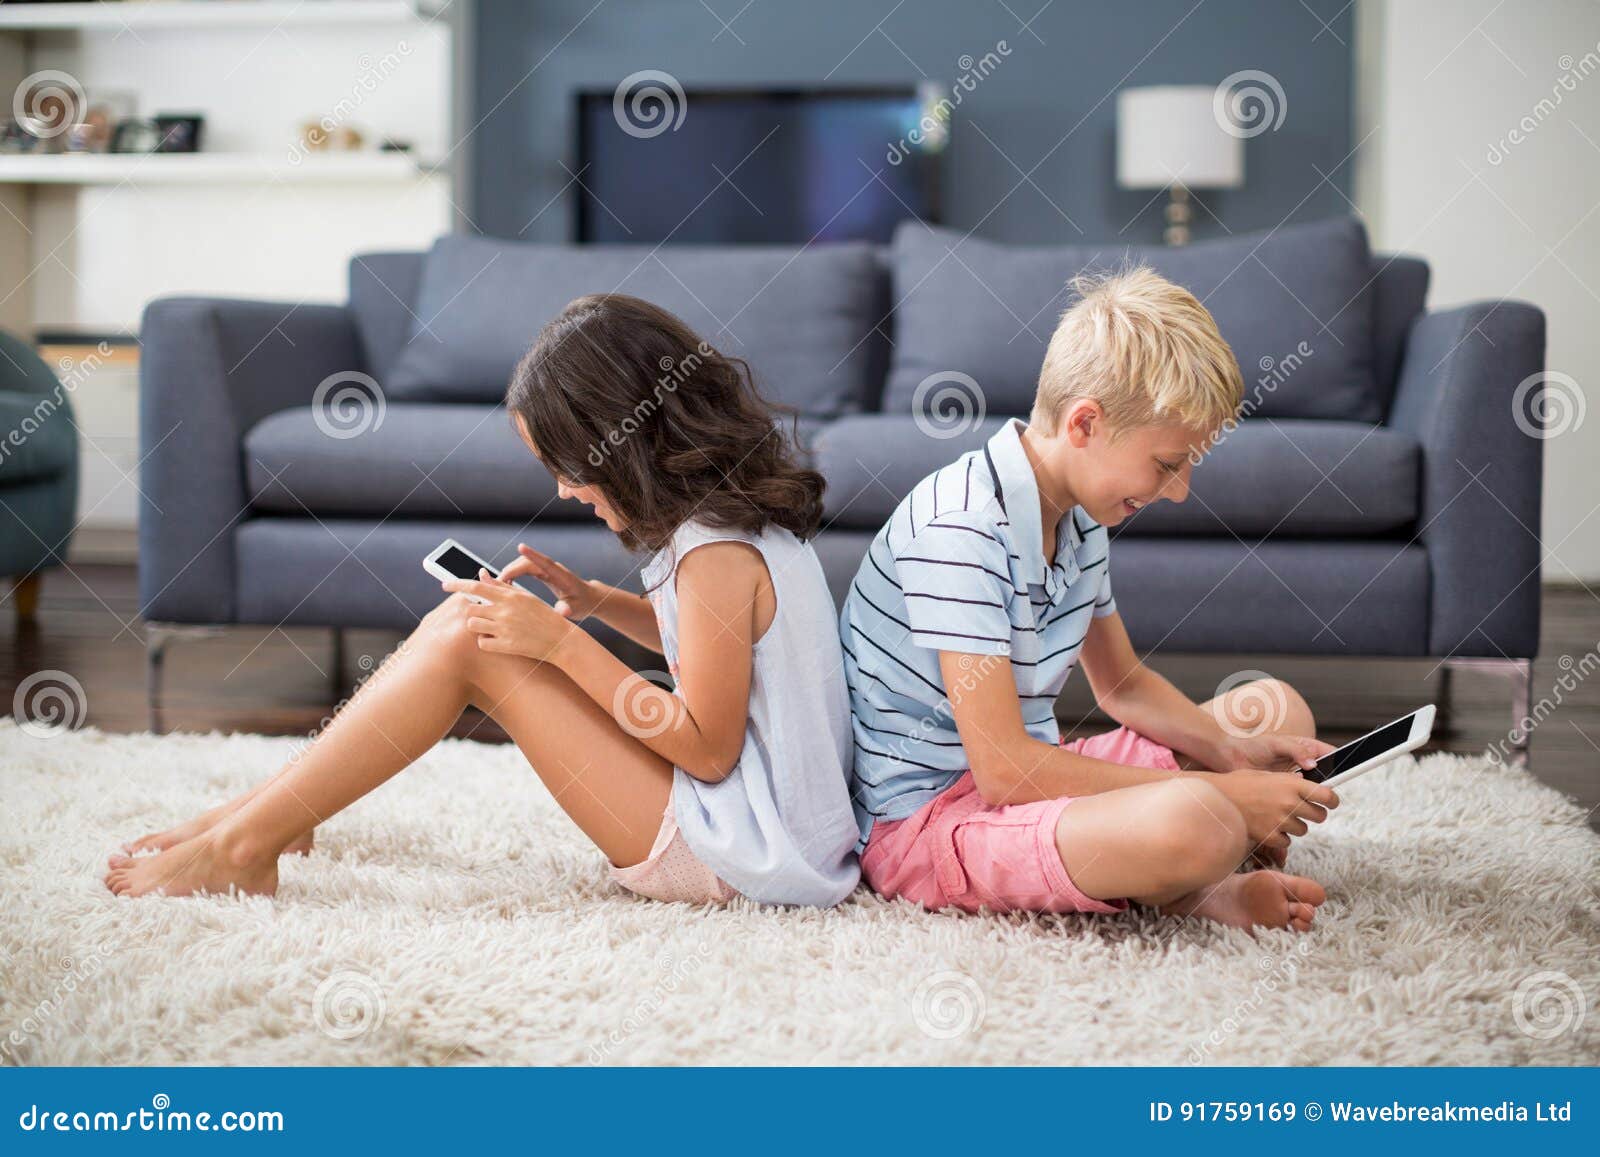 Сестра сидит в телефоне. Сестра сидит дома. Брат и сестра сидят с телефонами на диване с телефонами.